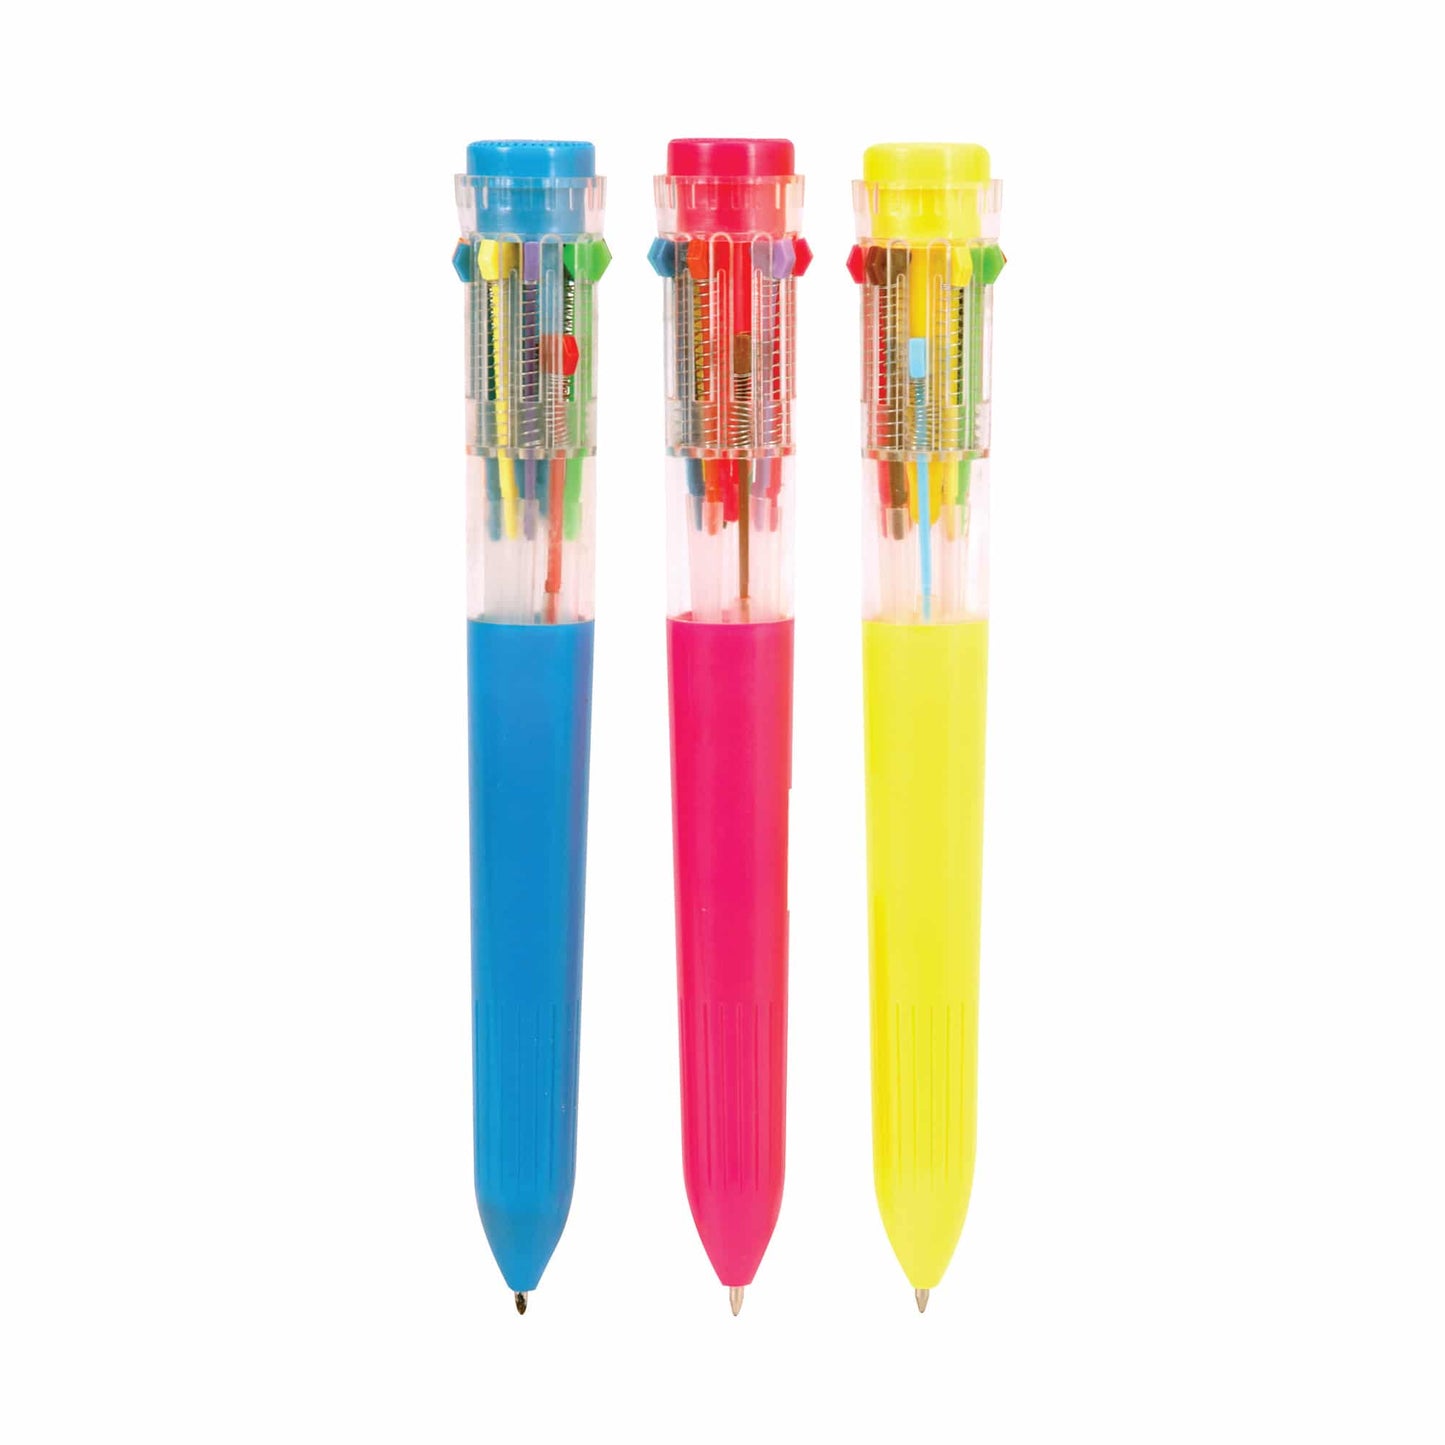 Schylling Toys - Ten Color Pen